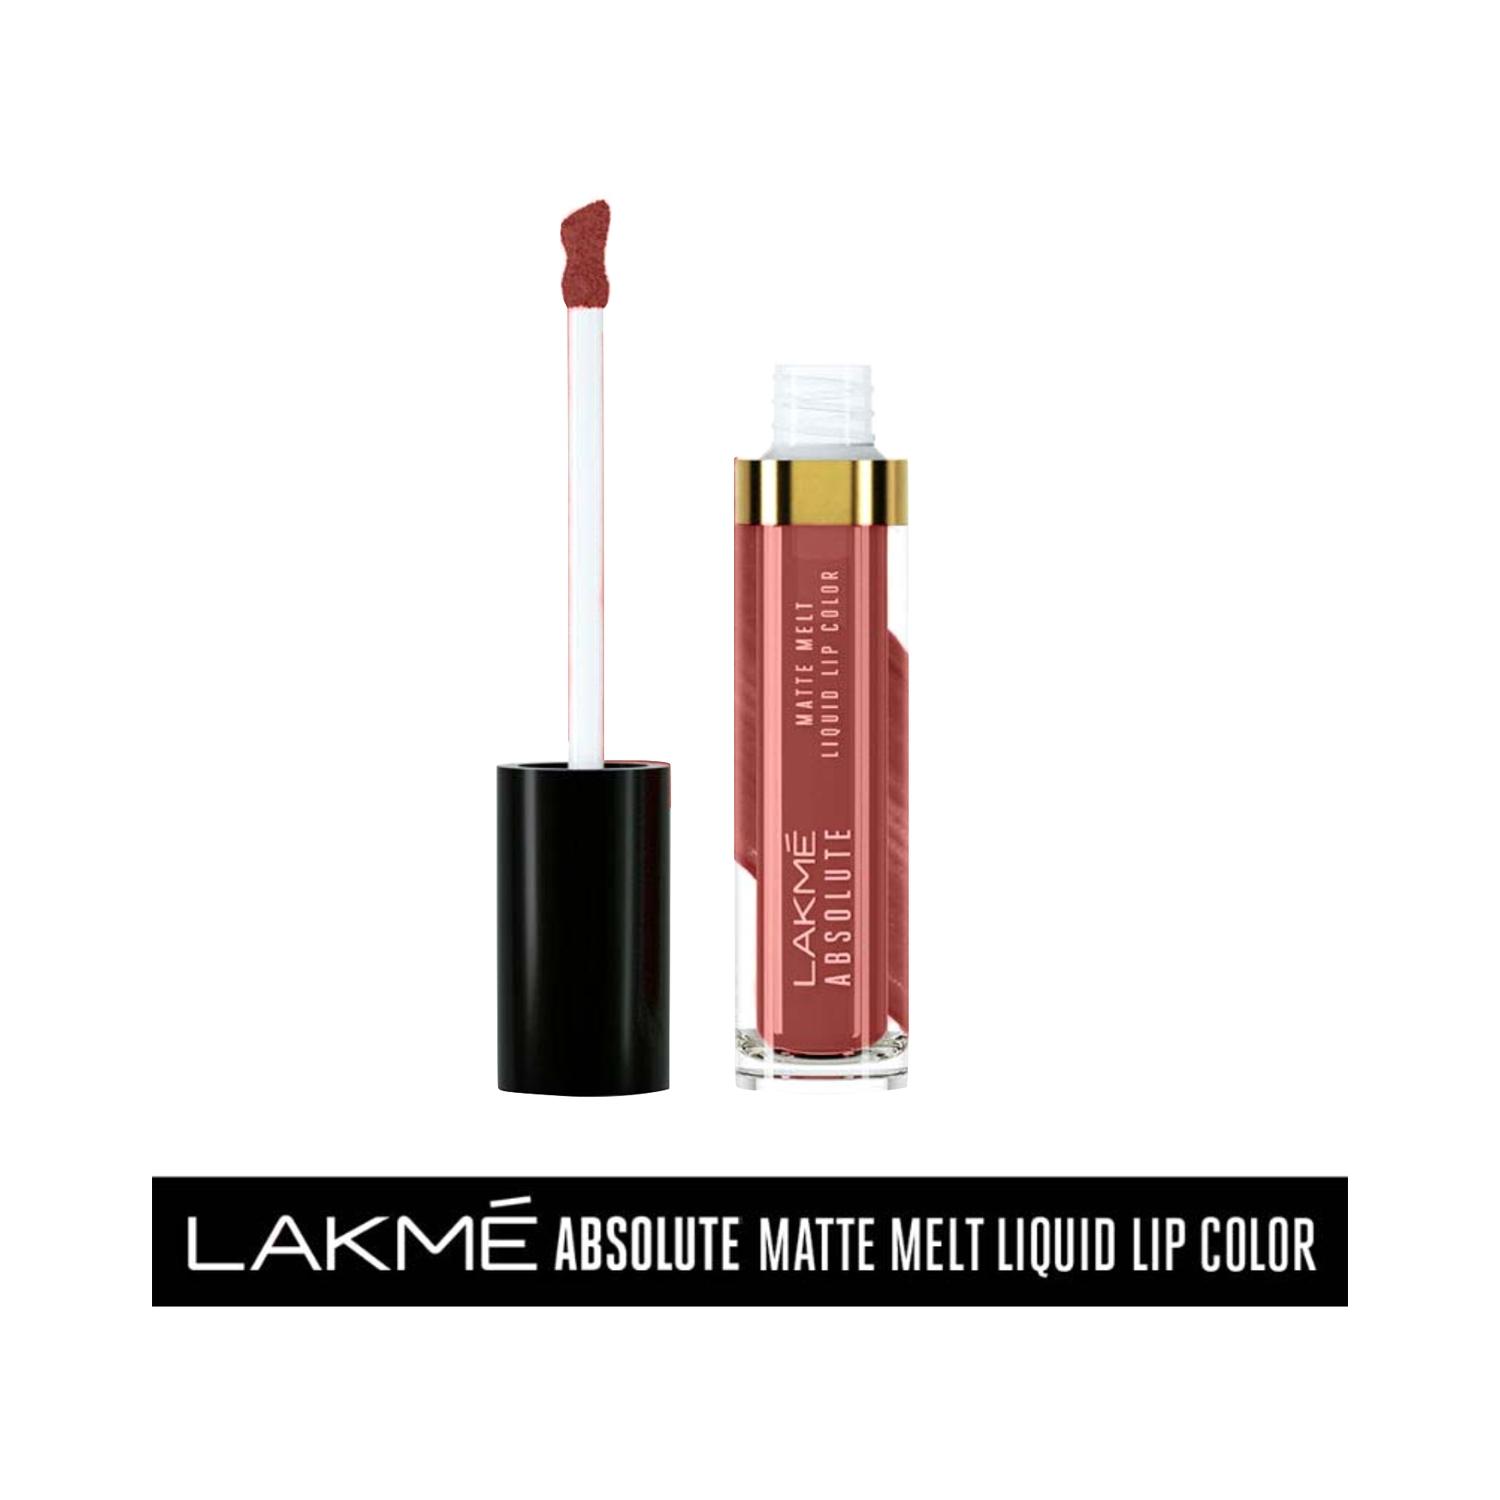 Lakme | Lakme Absolute Matte Melt Liquid Lip Color - Brown Tan (6ml)